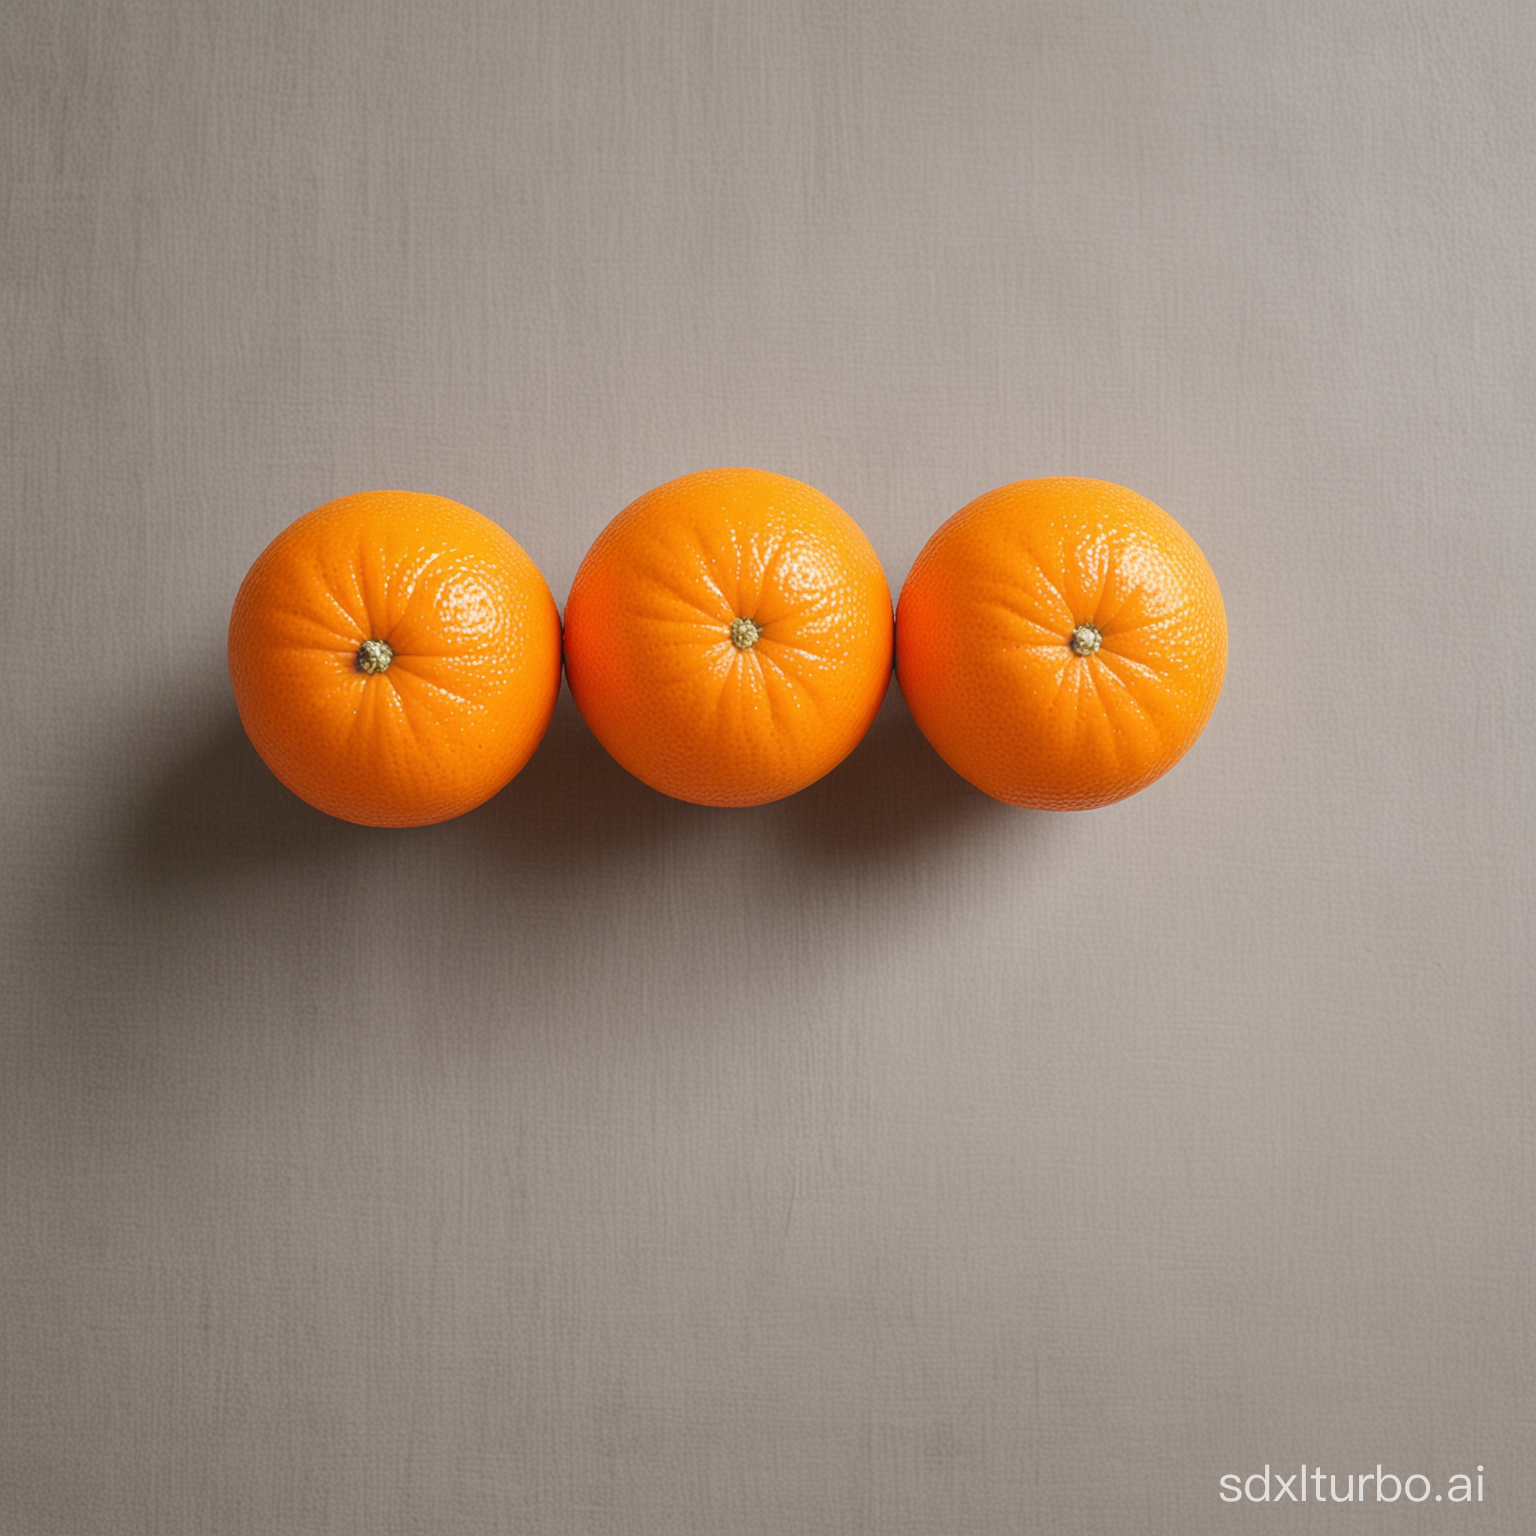 there are three orange.